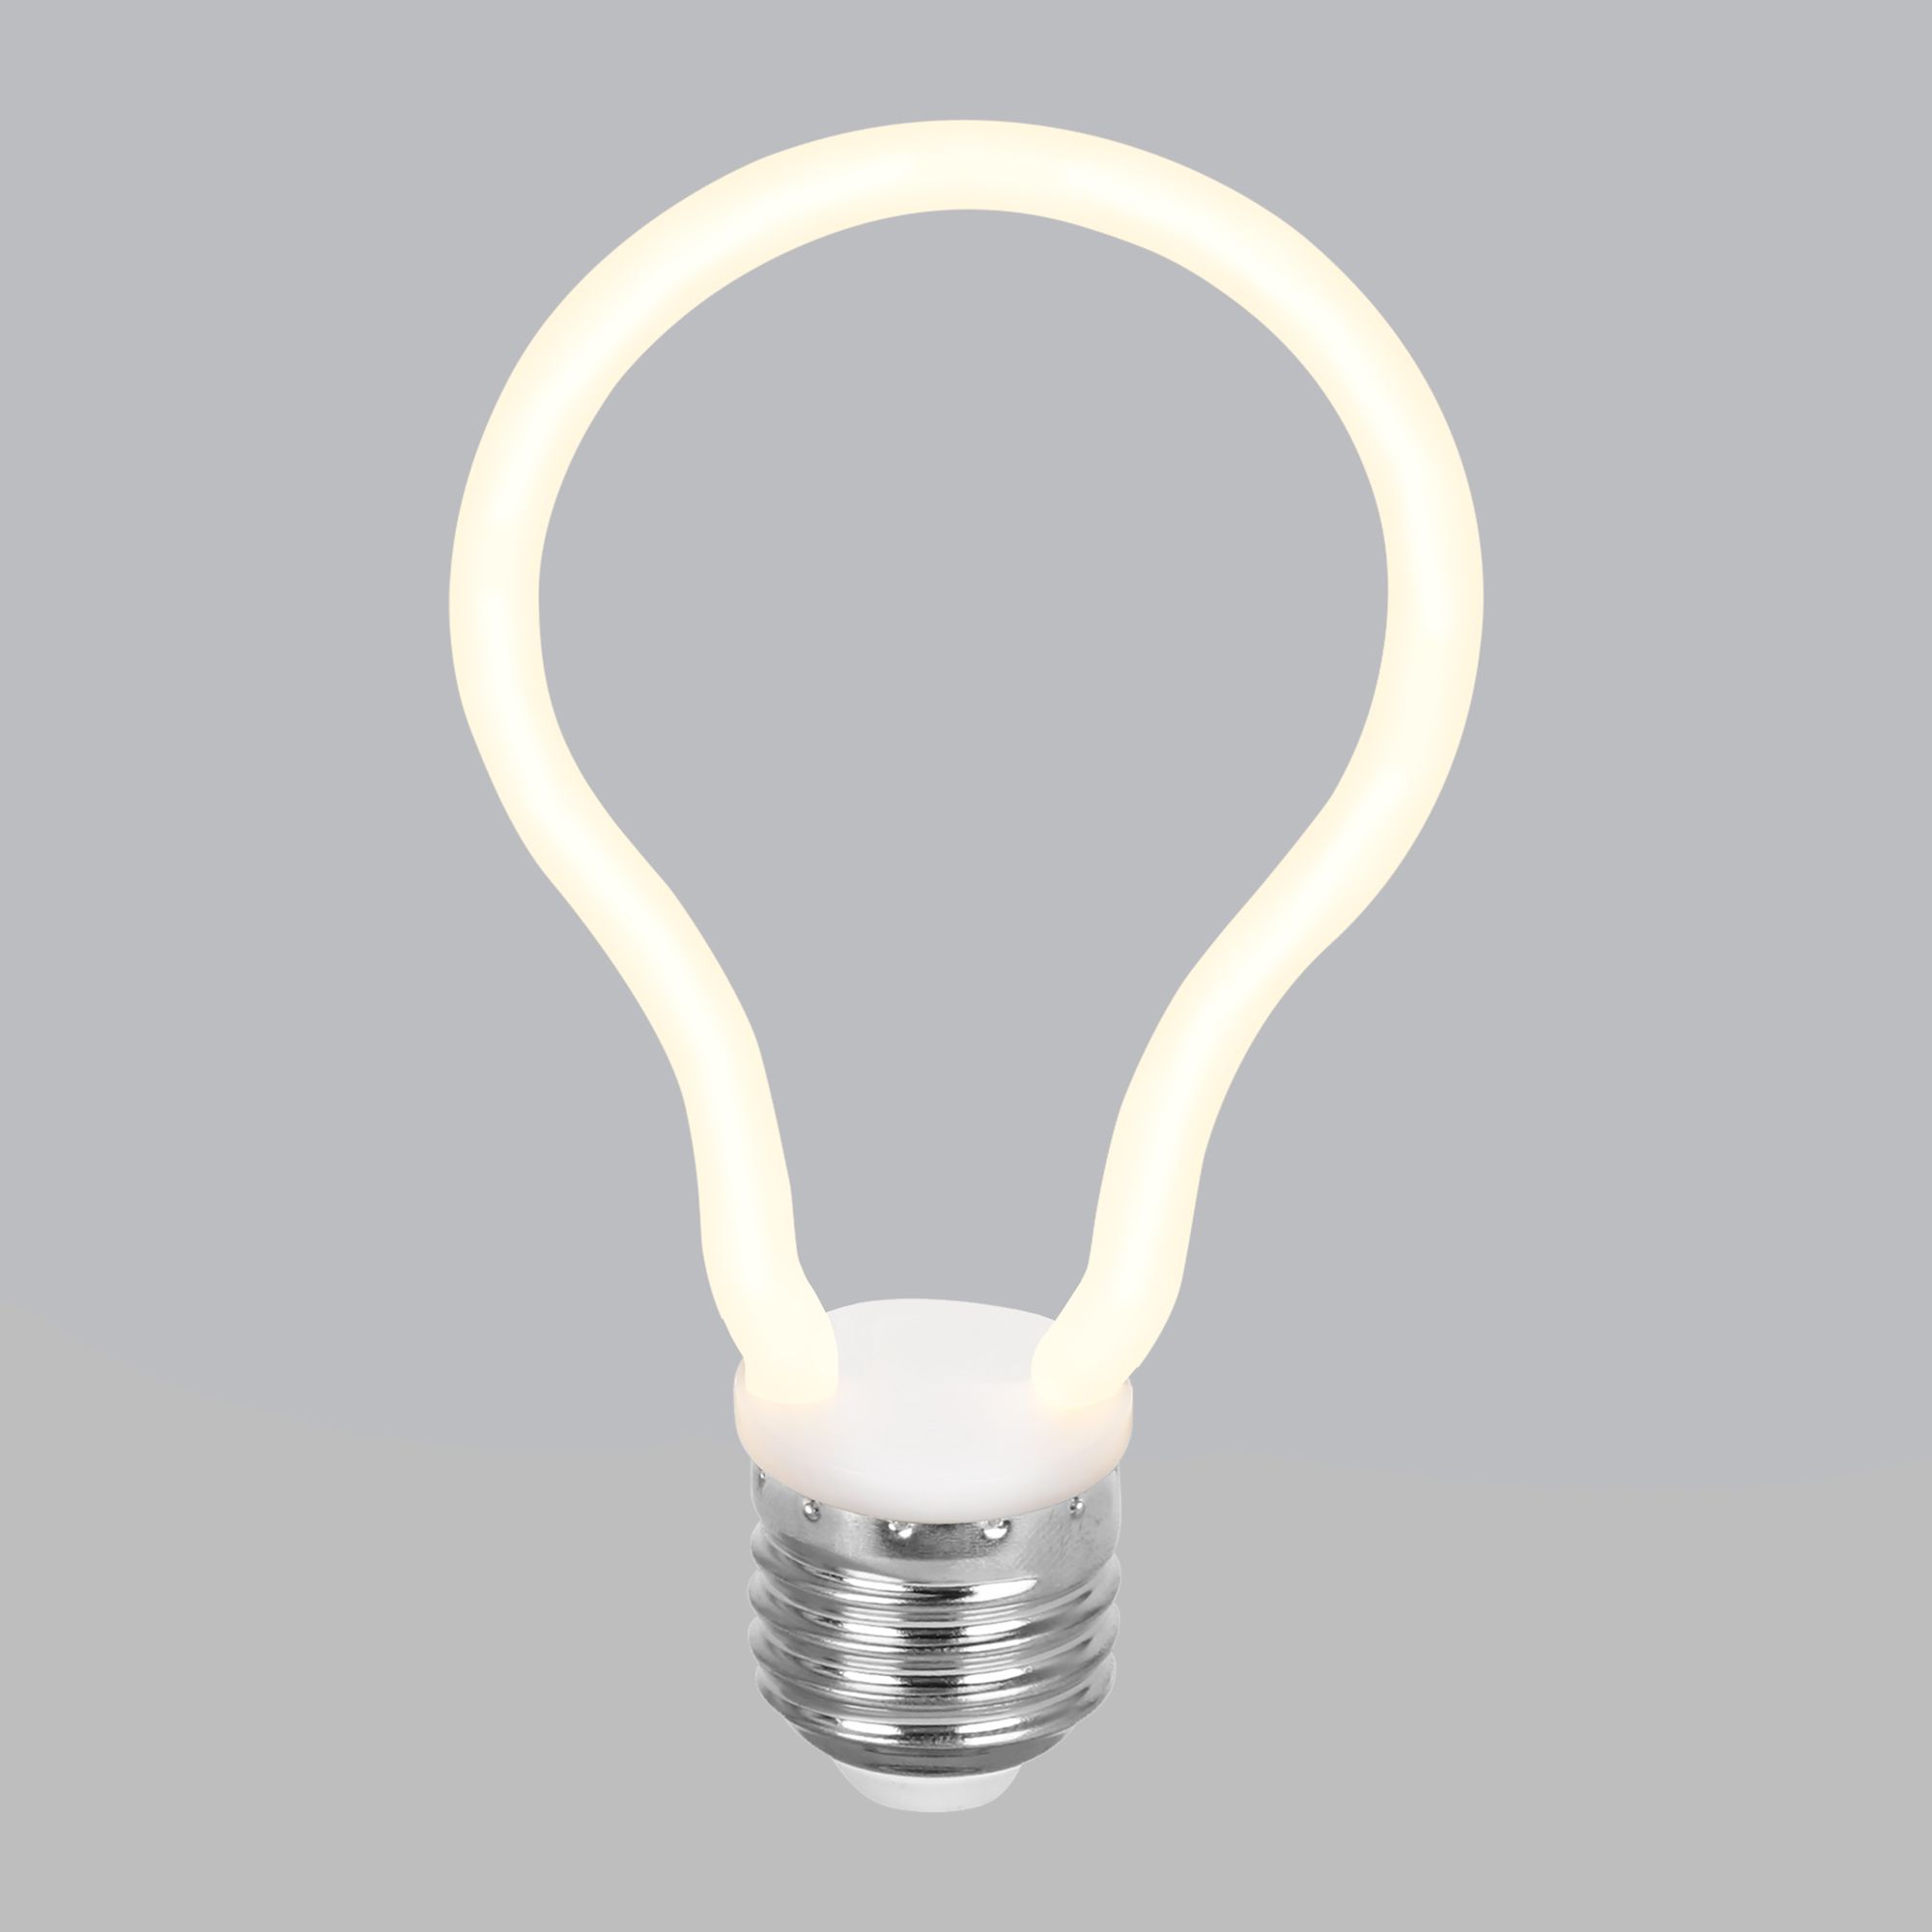 Филаментная светодиодная лампа Decor filament 4W 2700K E27 Elektrostandard Decor filament BL157. Фото 2